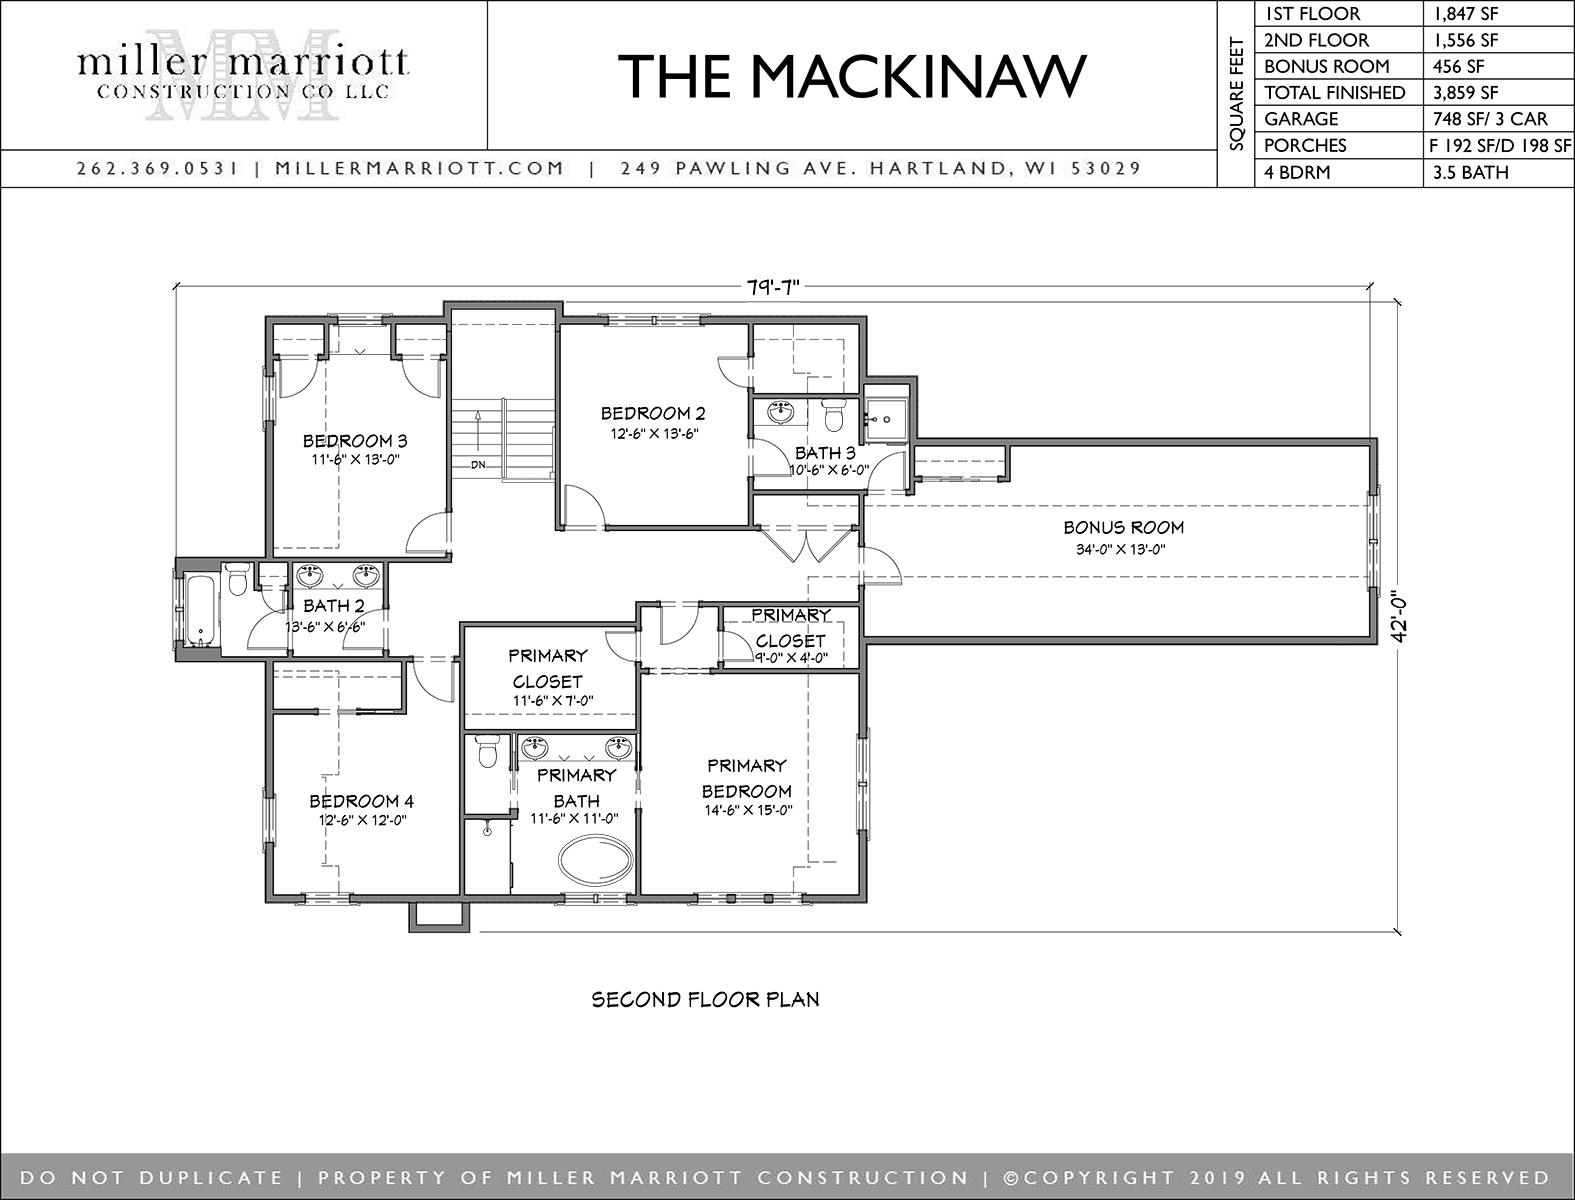 The Mackinaw second floor plan